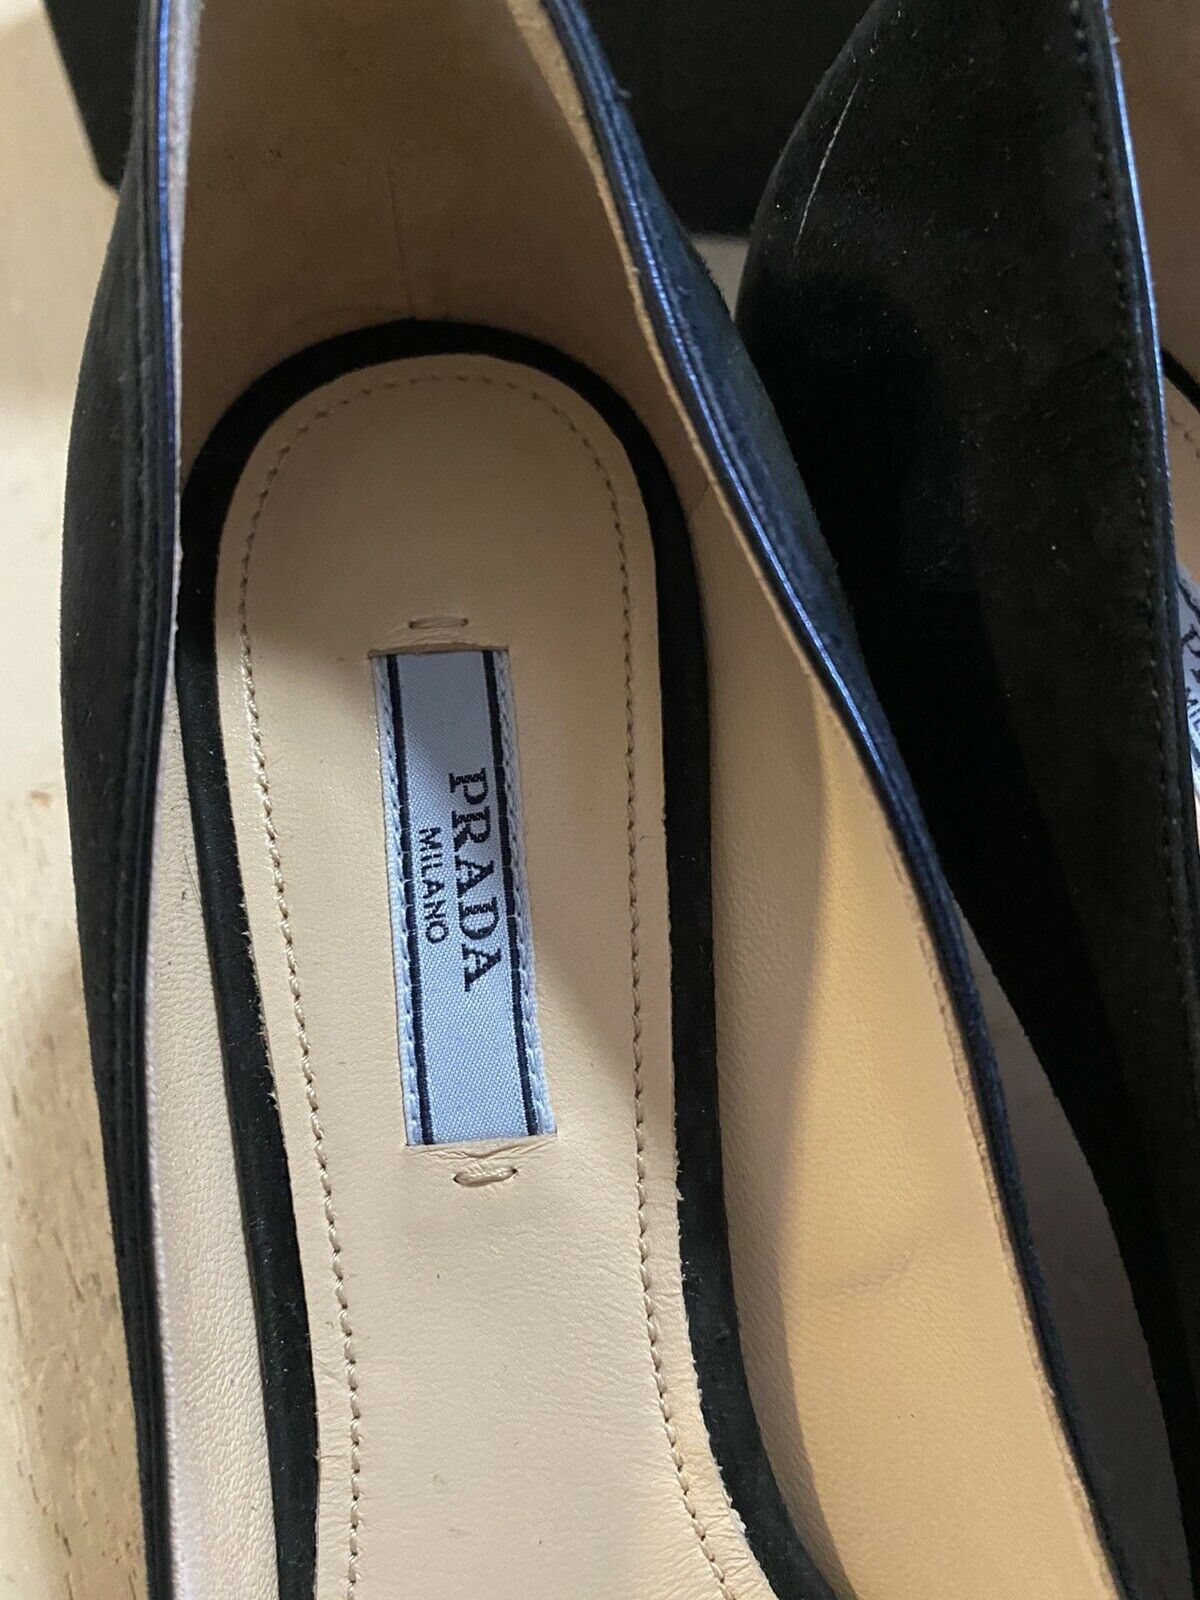 NIB $750 PRADA Women Scallop Suede Pumps Shoes Black 8.5 US/38.5 Eu Italy